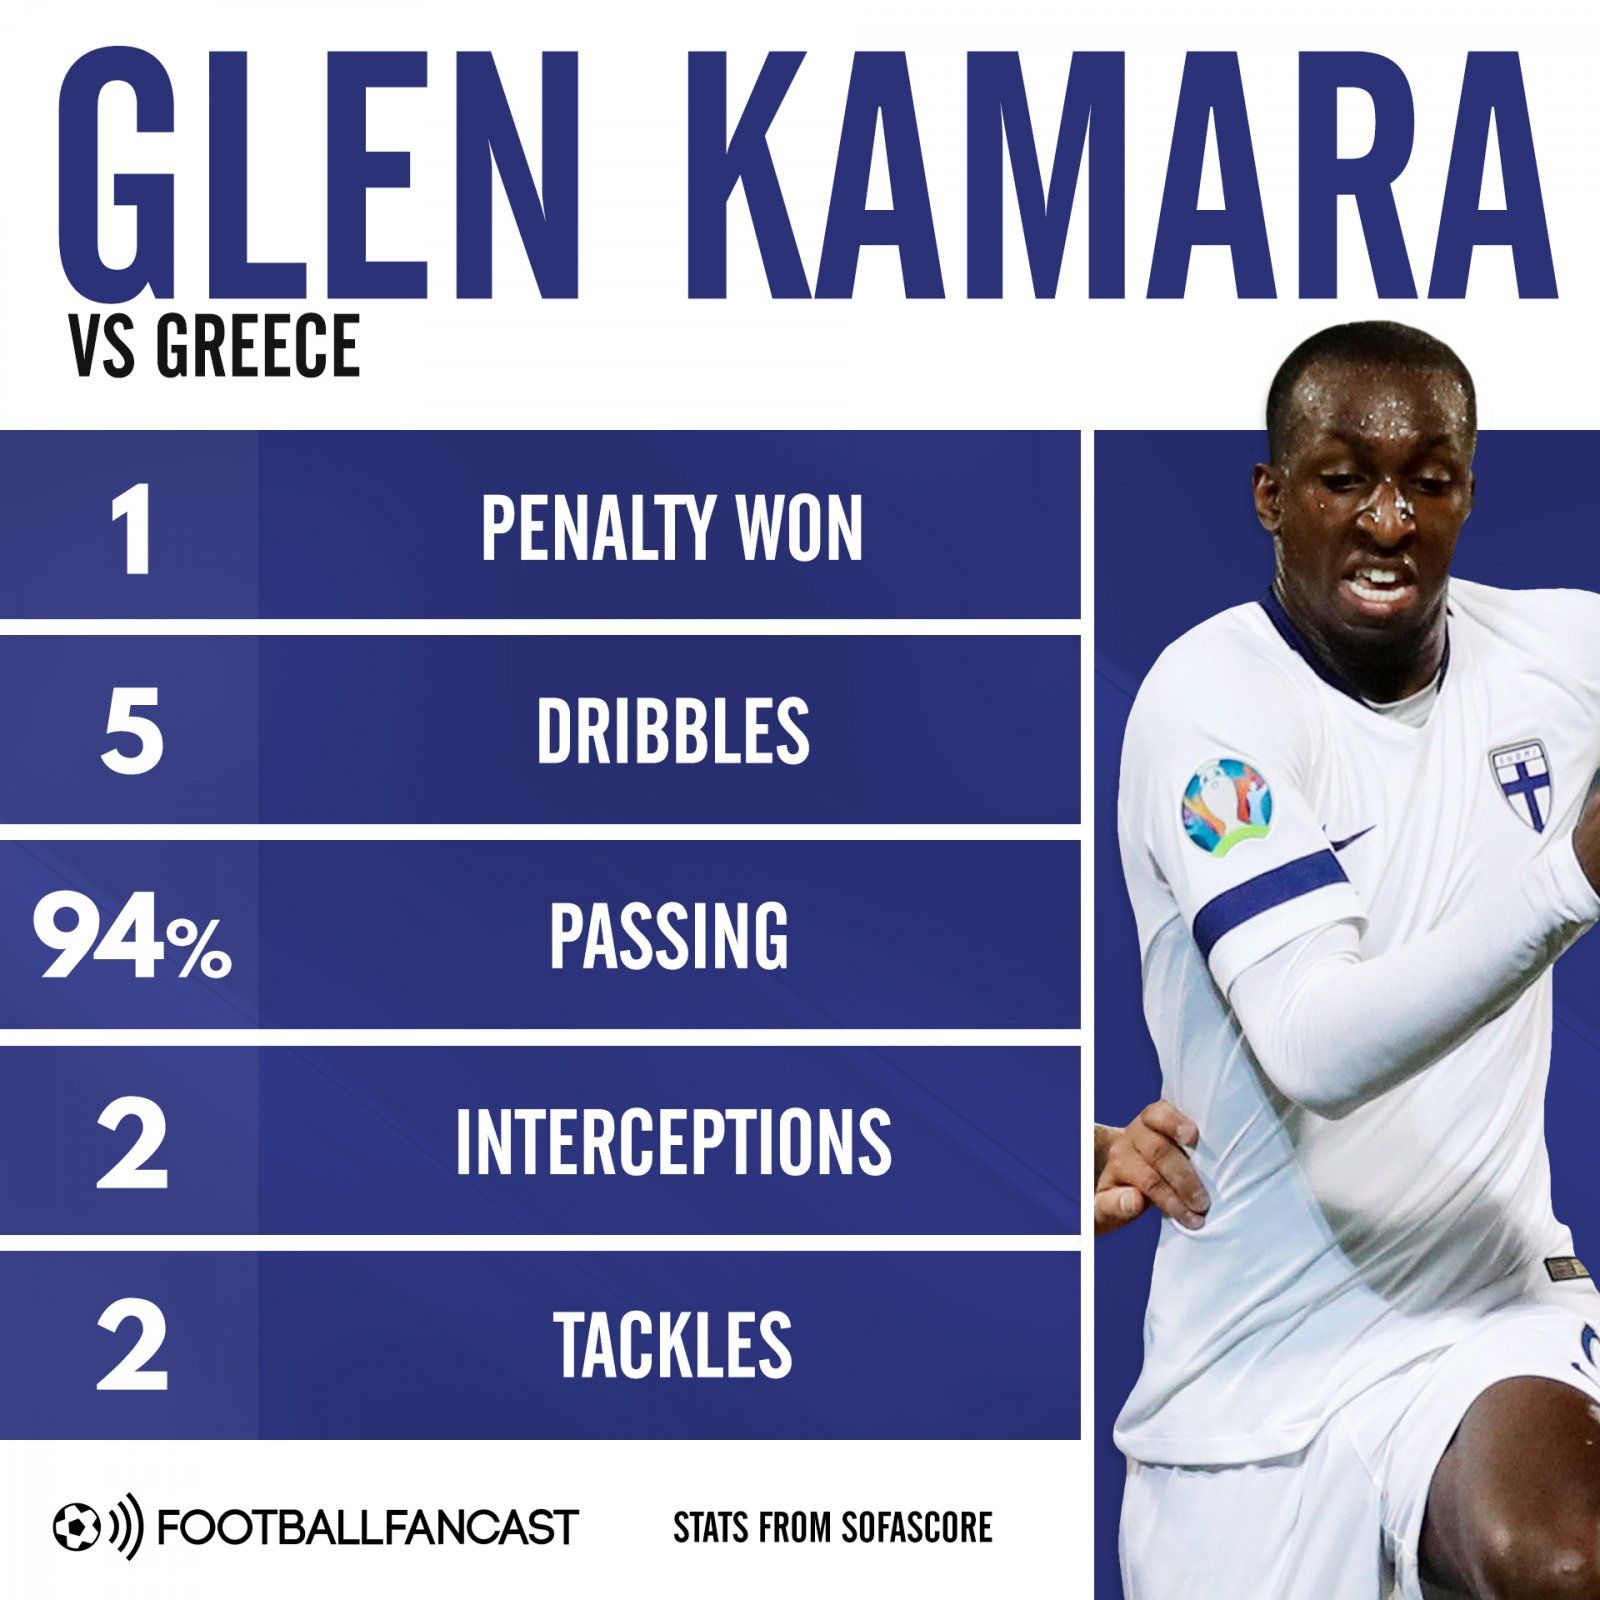 Glen Kamara for Finland vs Greece